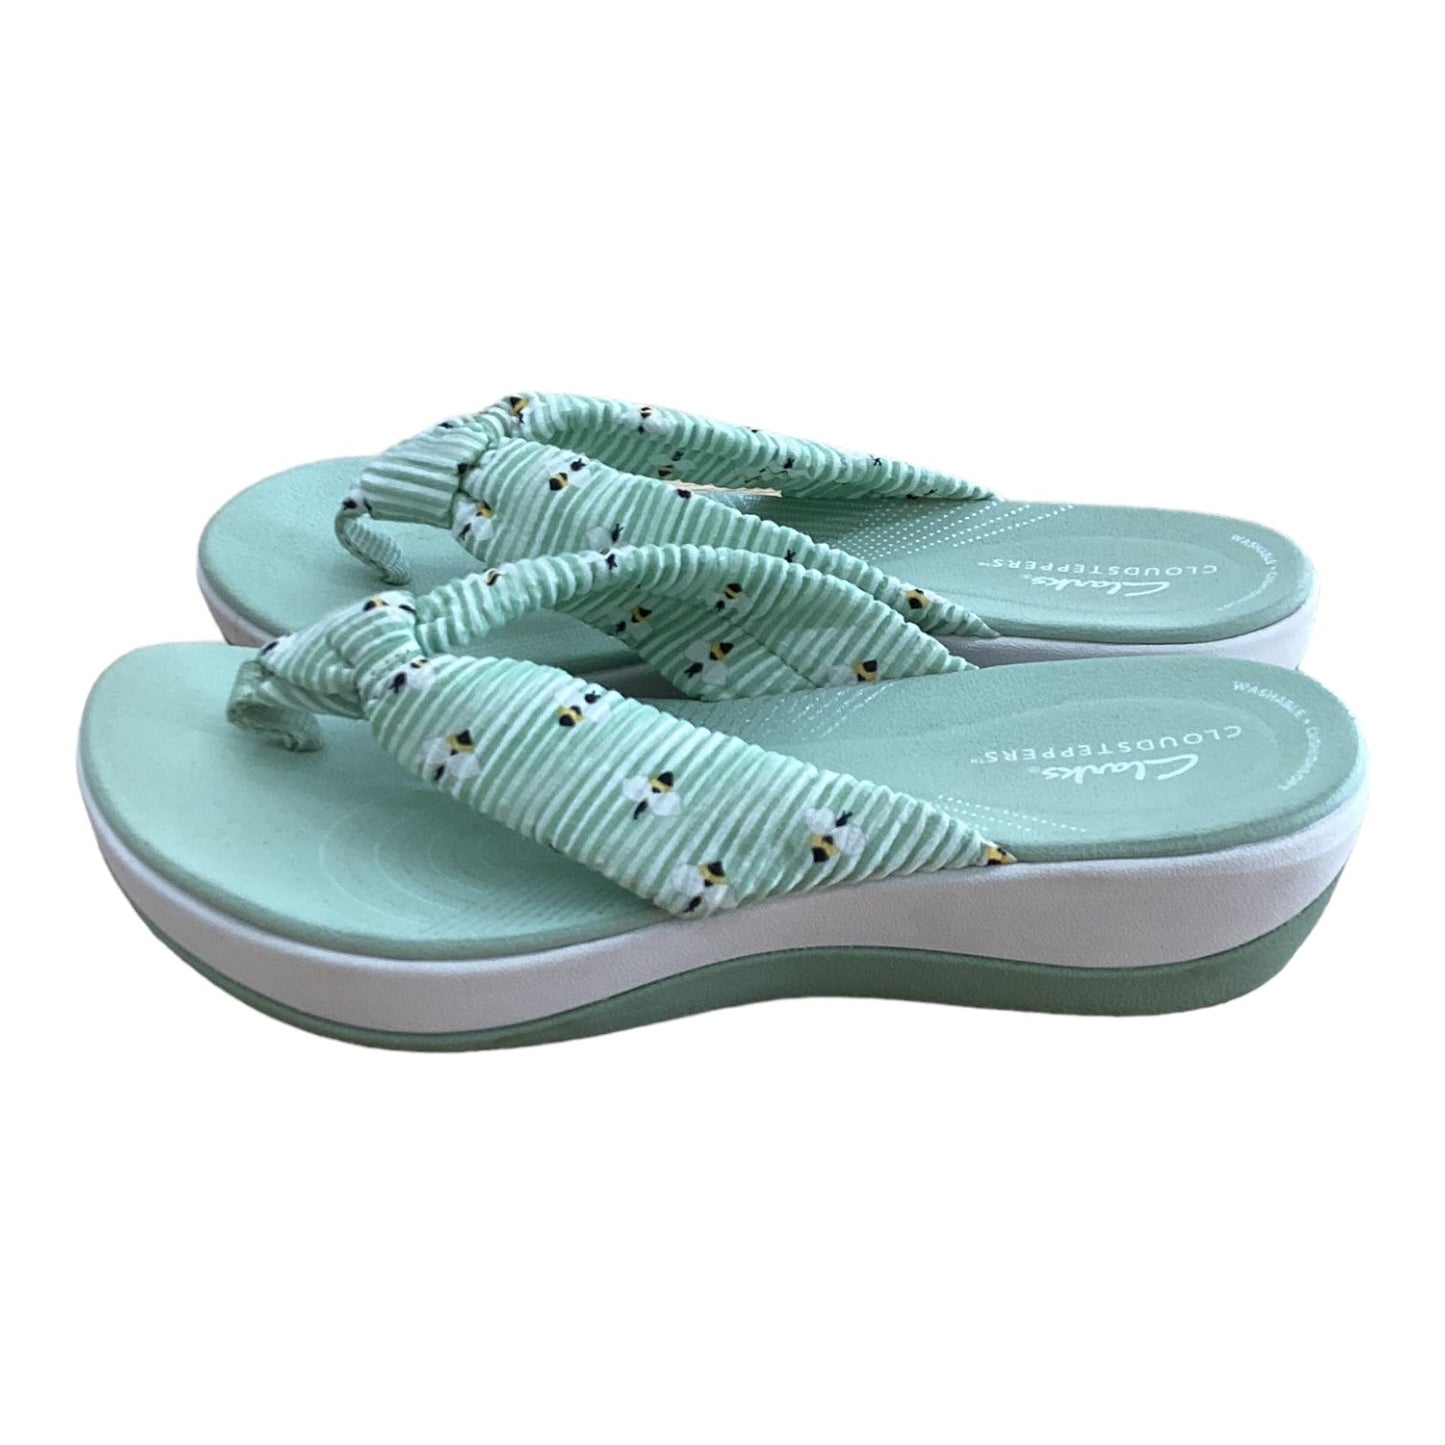 Green Sandals Flip Flops Clarks, Size 8